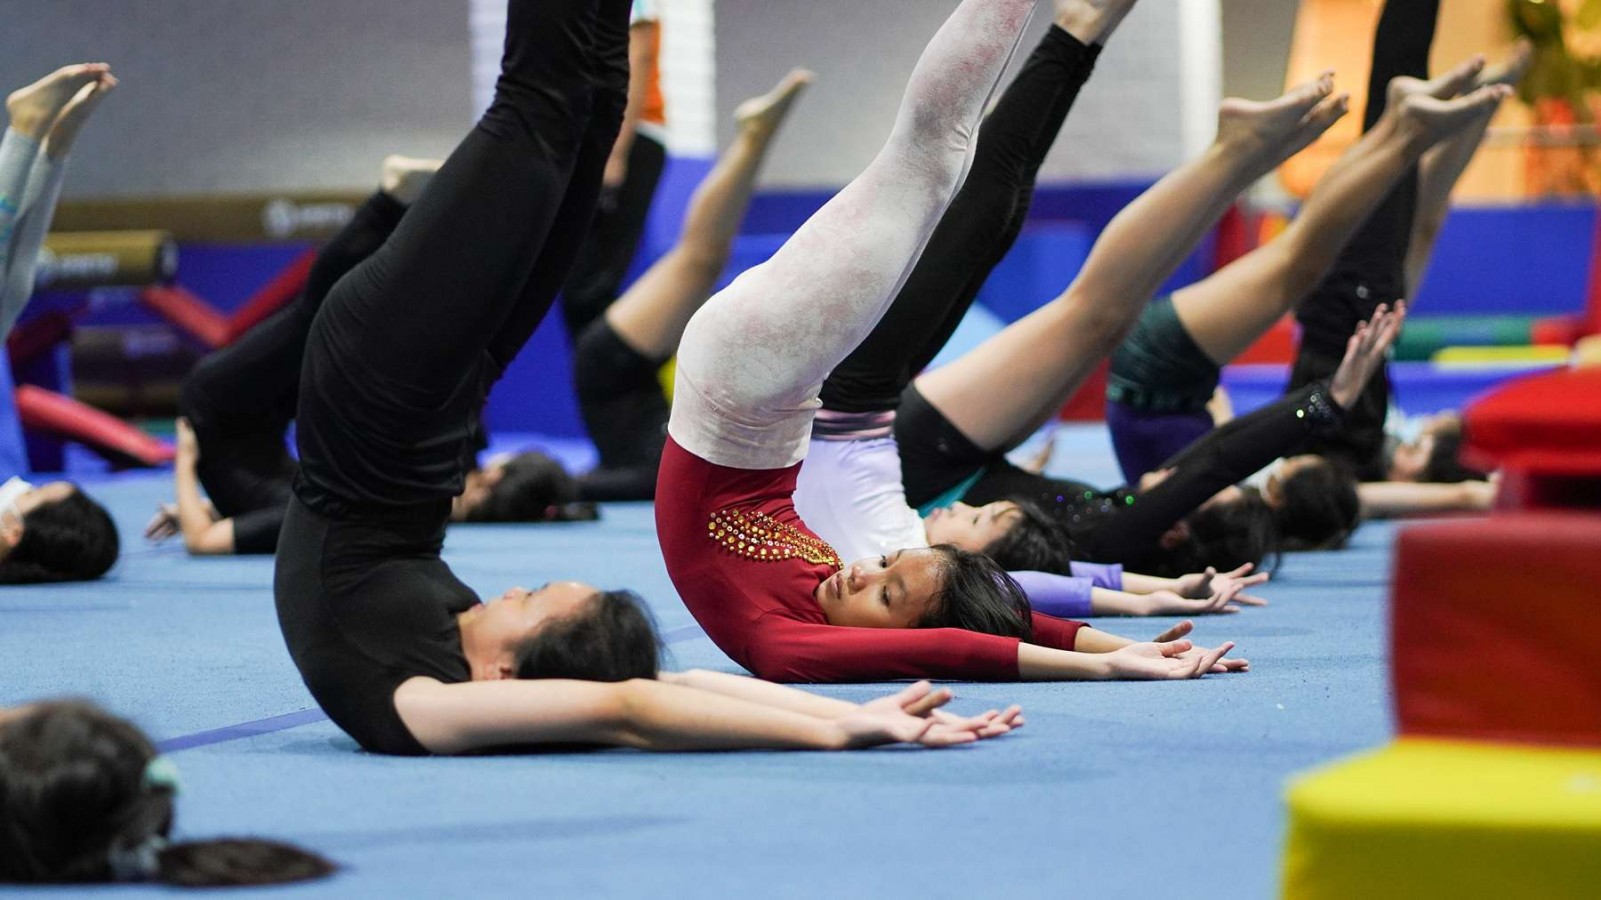  The Benefits of Gymnastics Classes